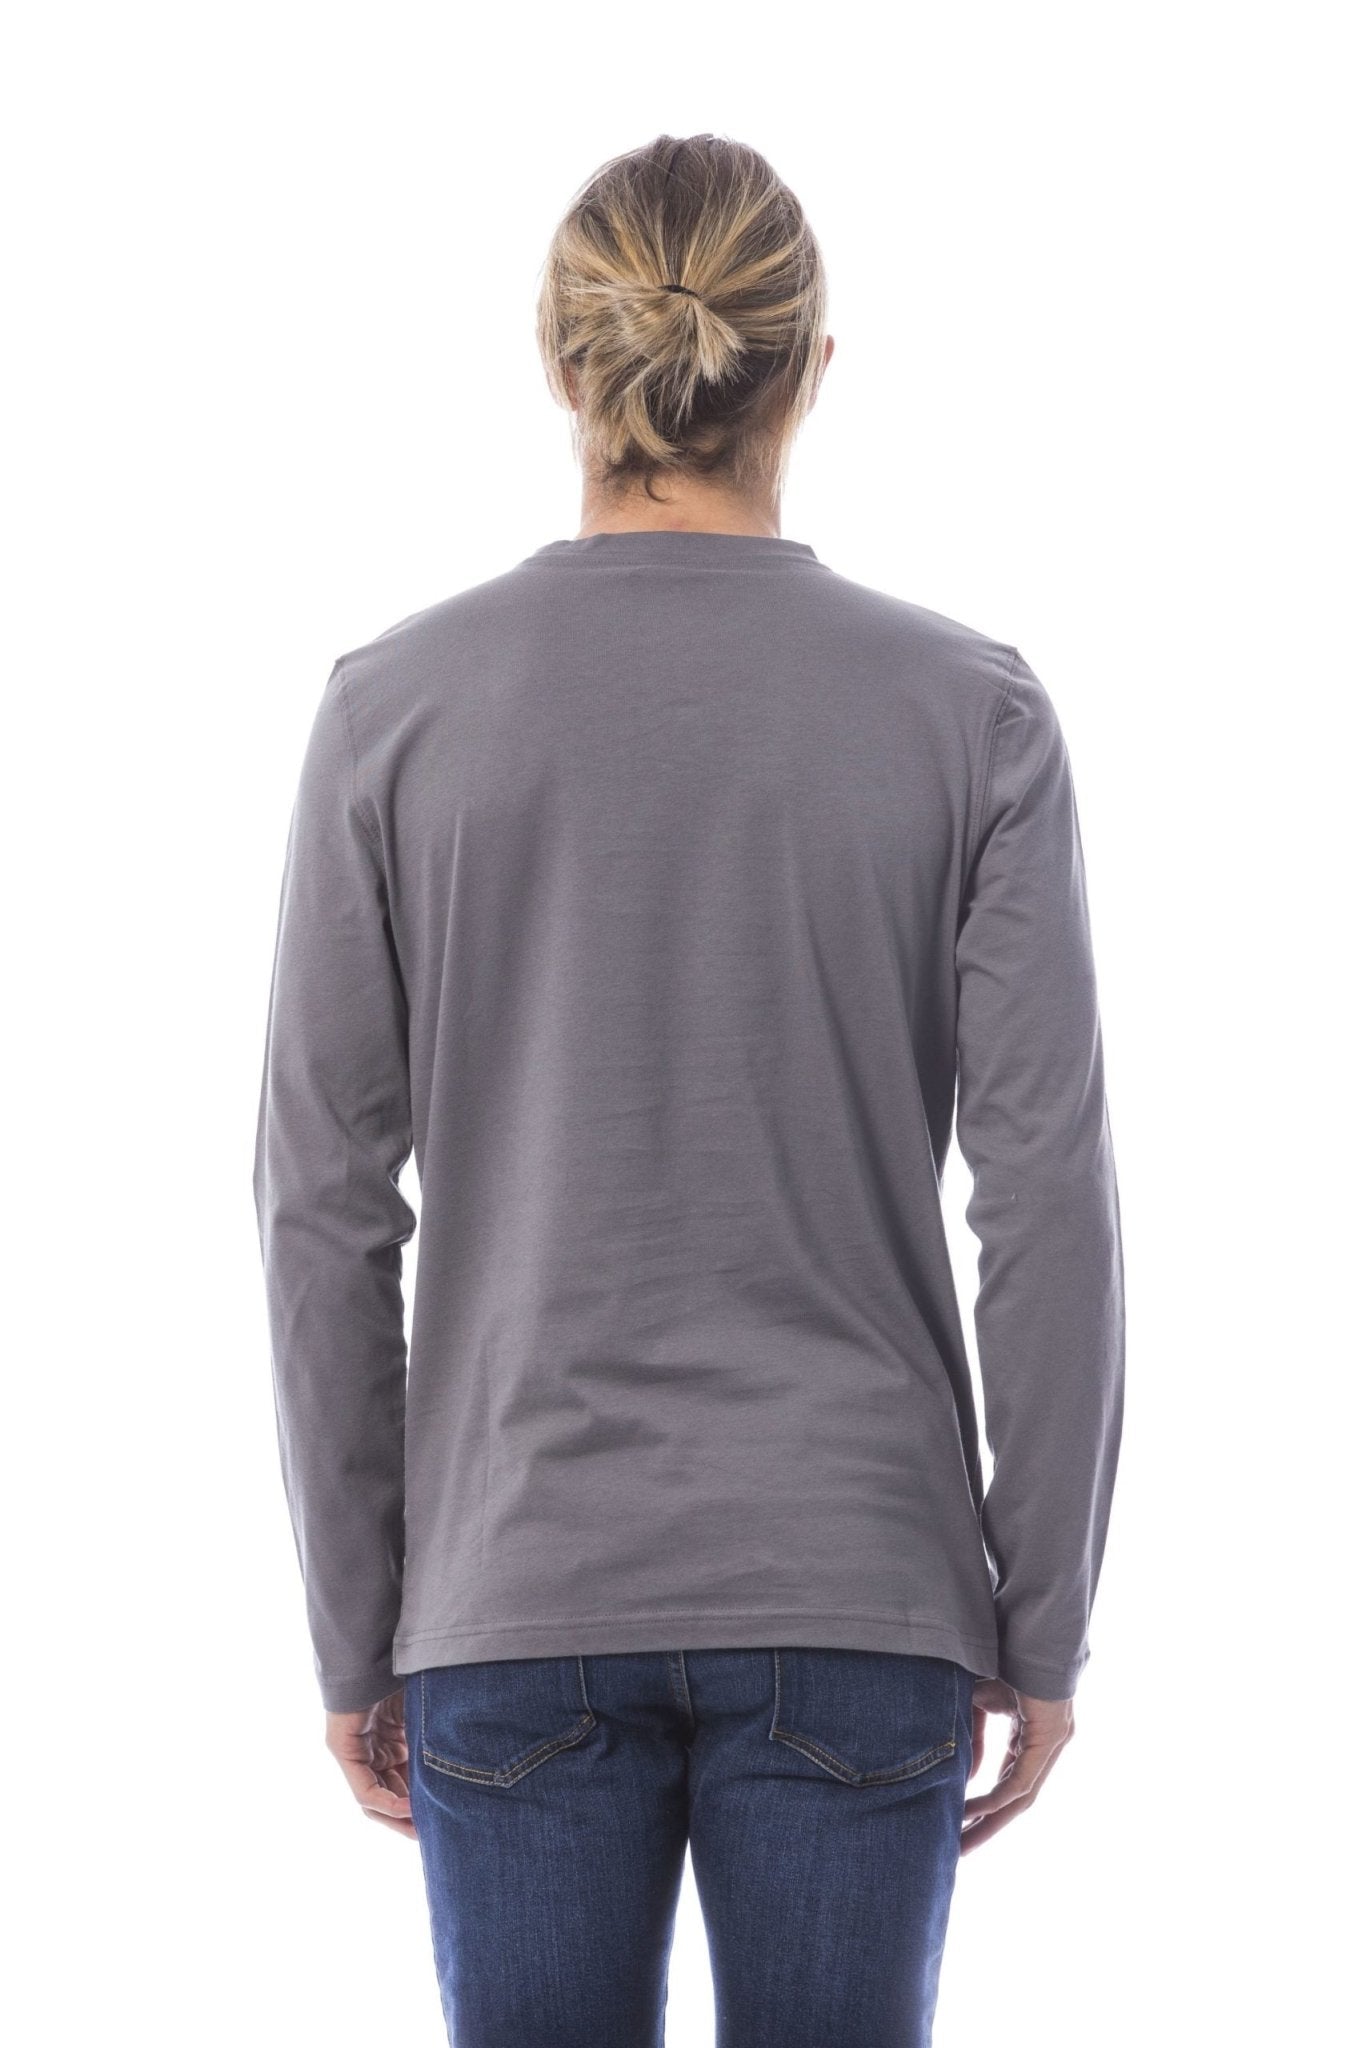 Verri Gray Cotton T-Shirt - Fizigo